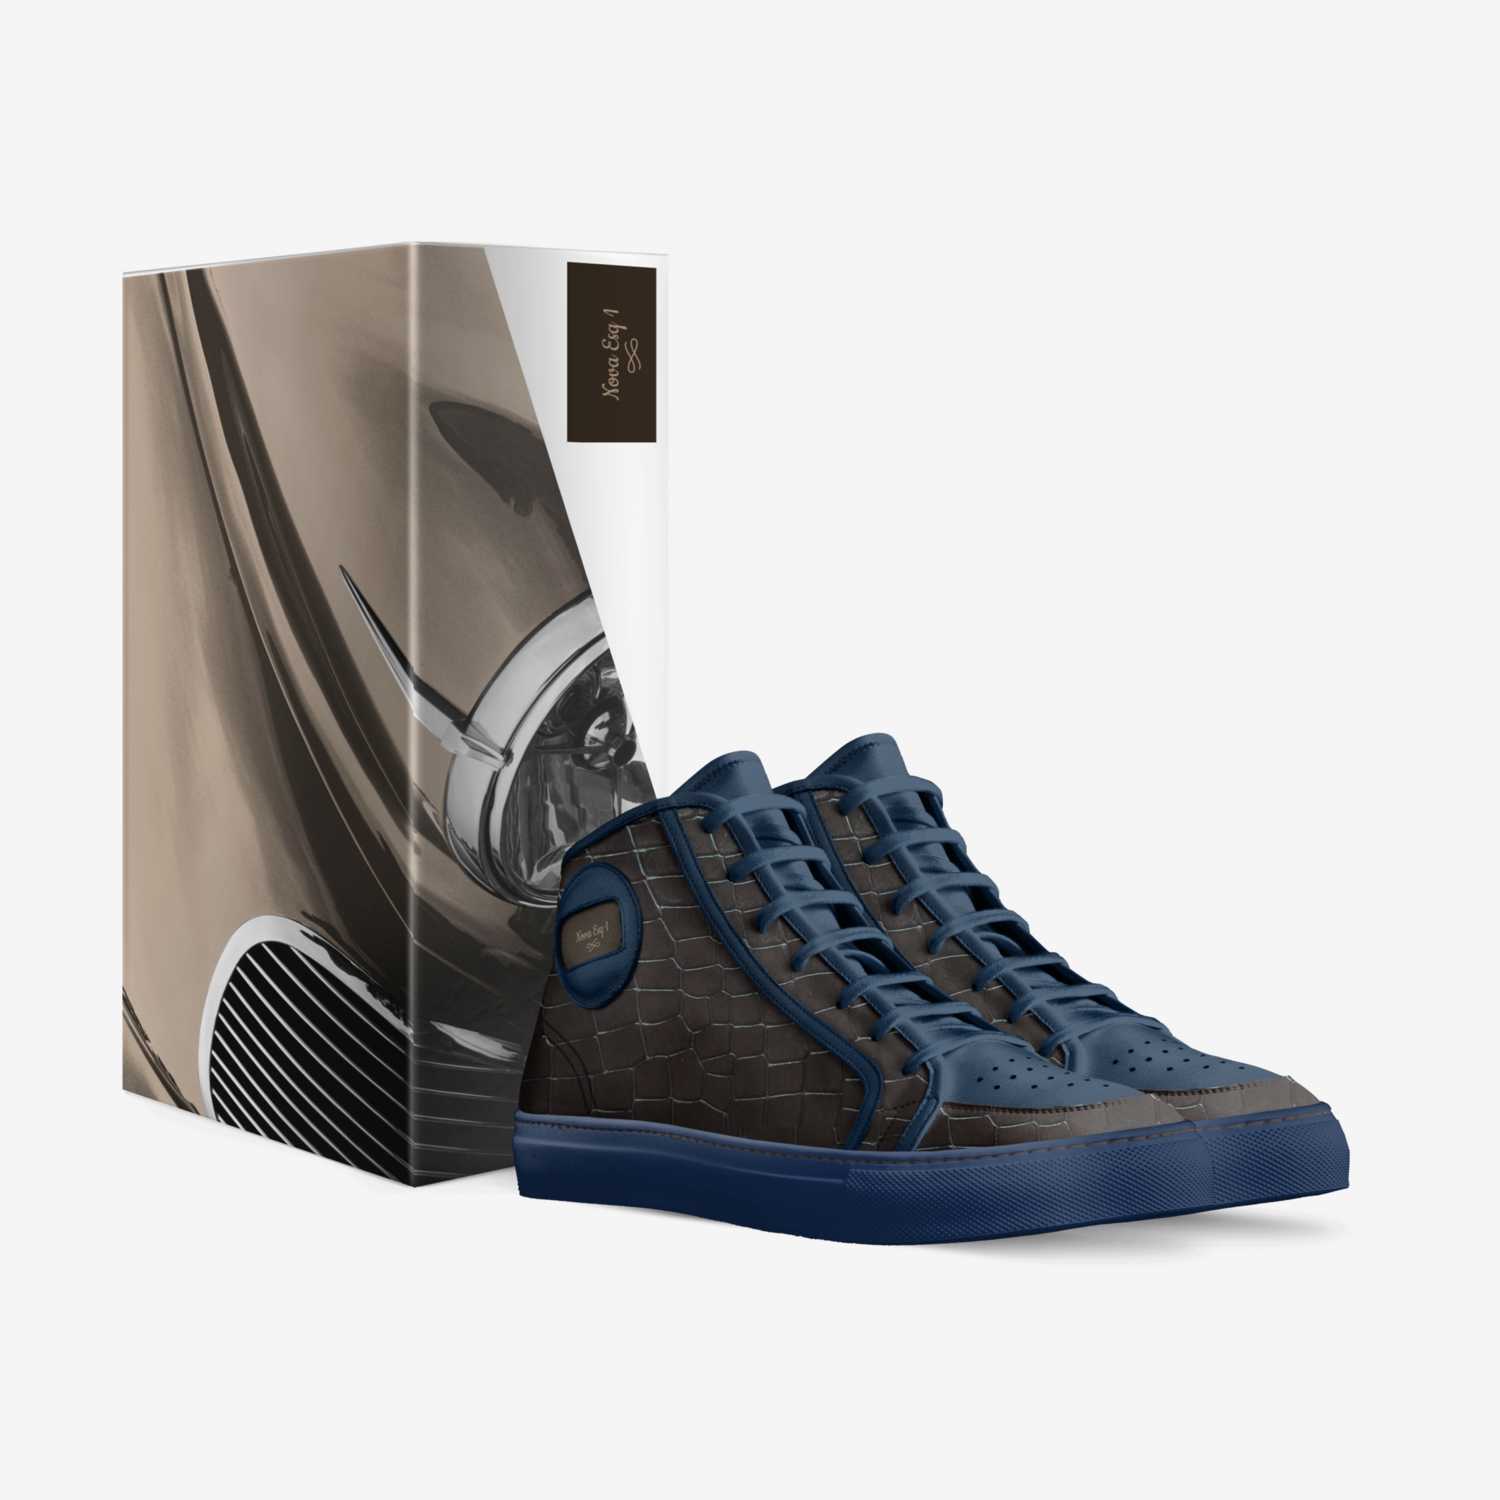 Nova Esq 1 custom made in Italy shoes by Robert Chapman | Box view